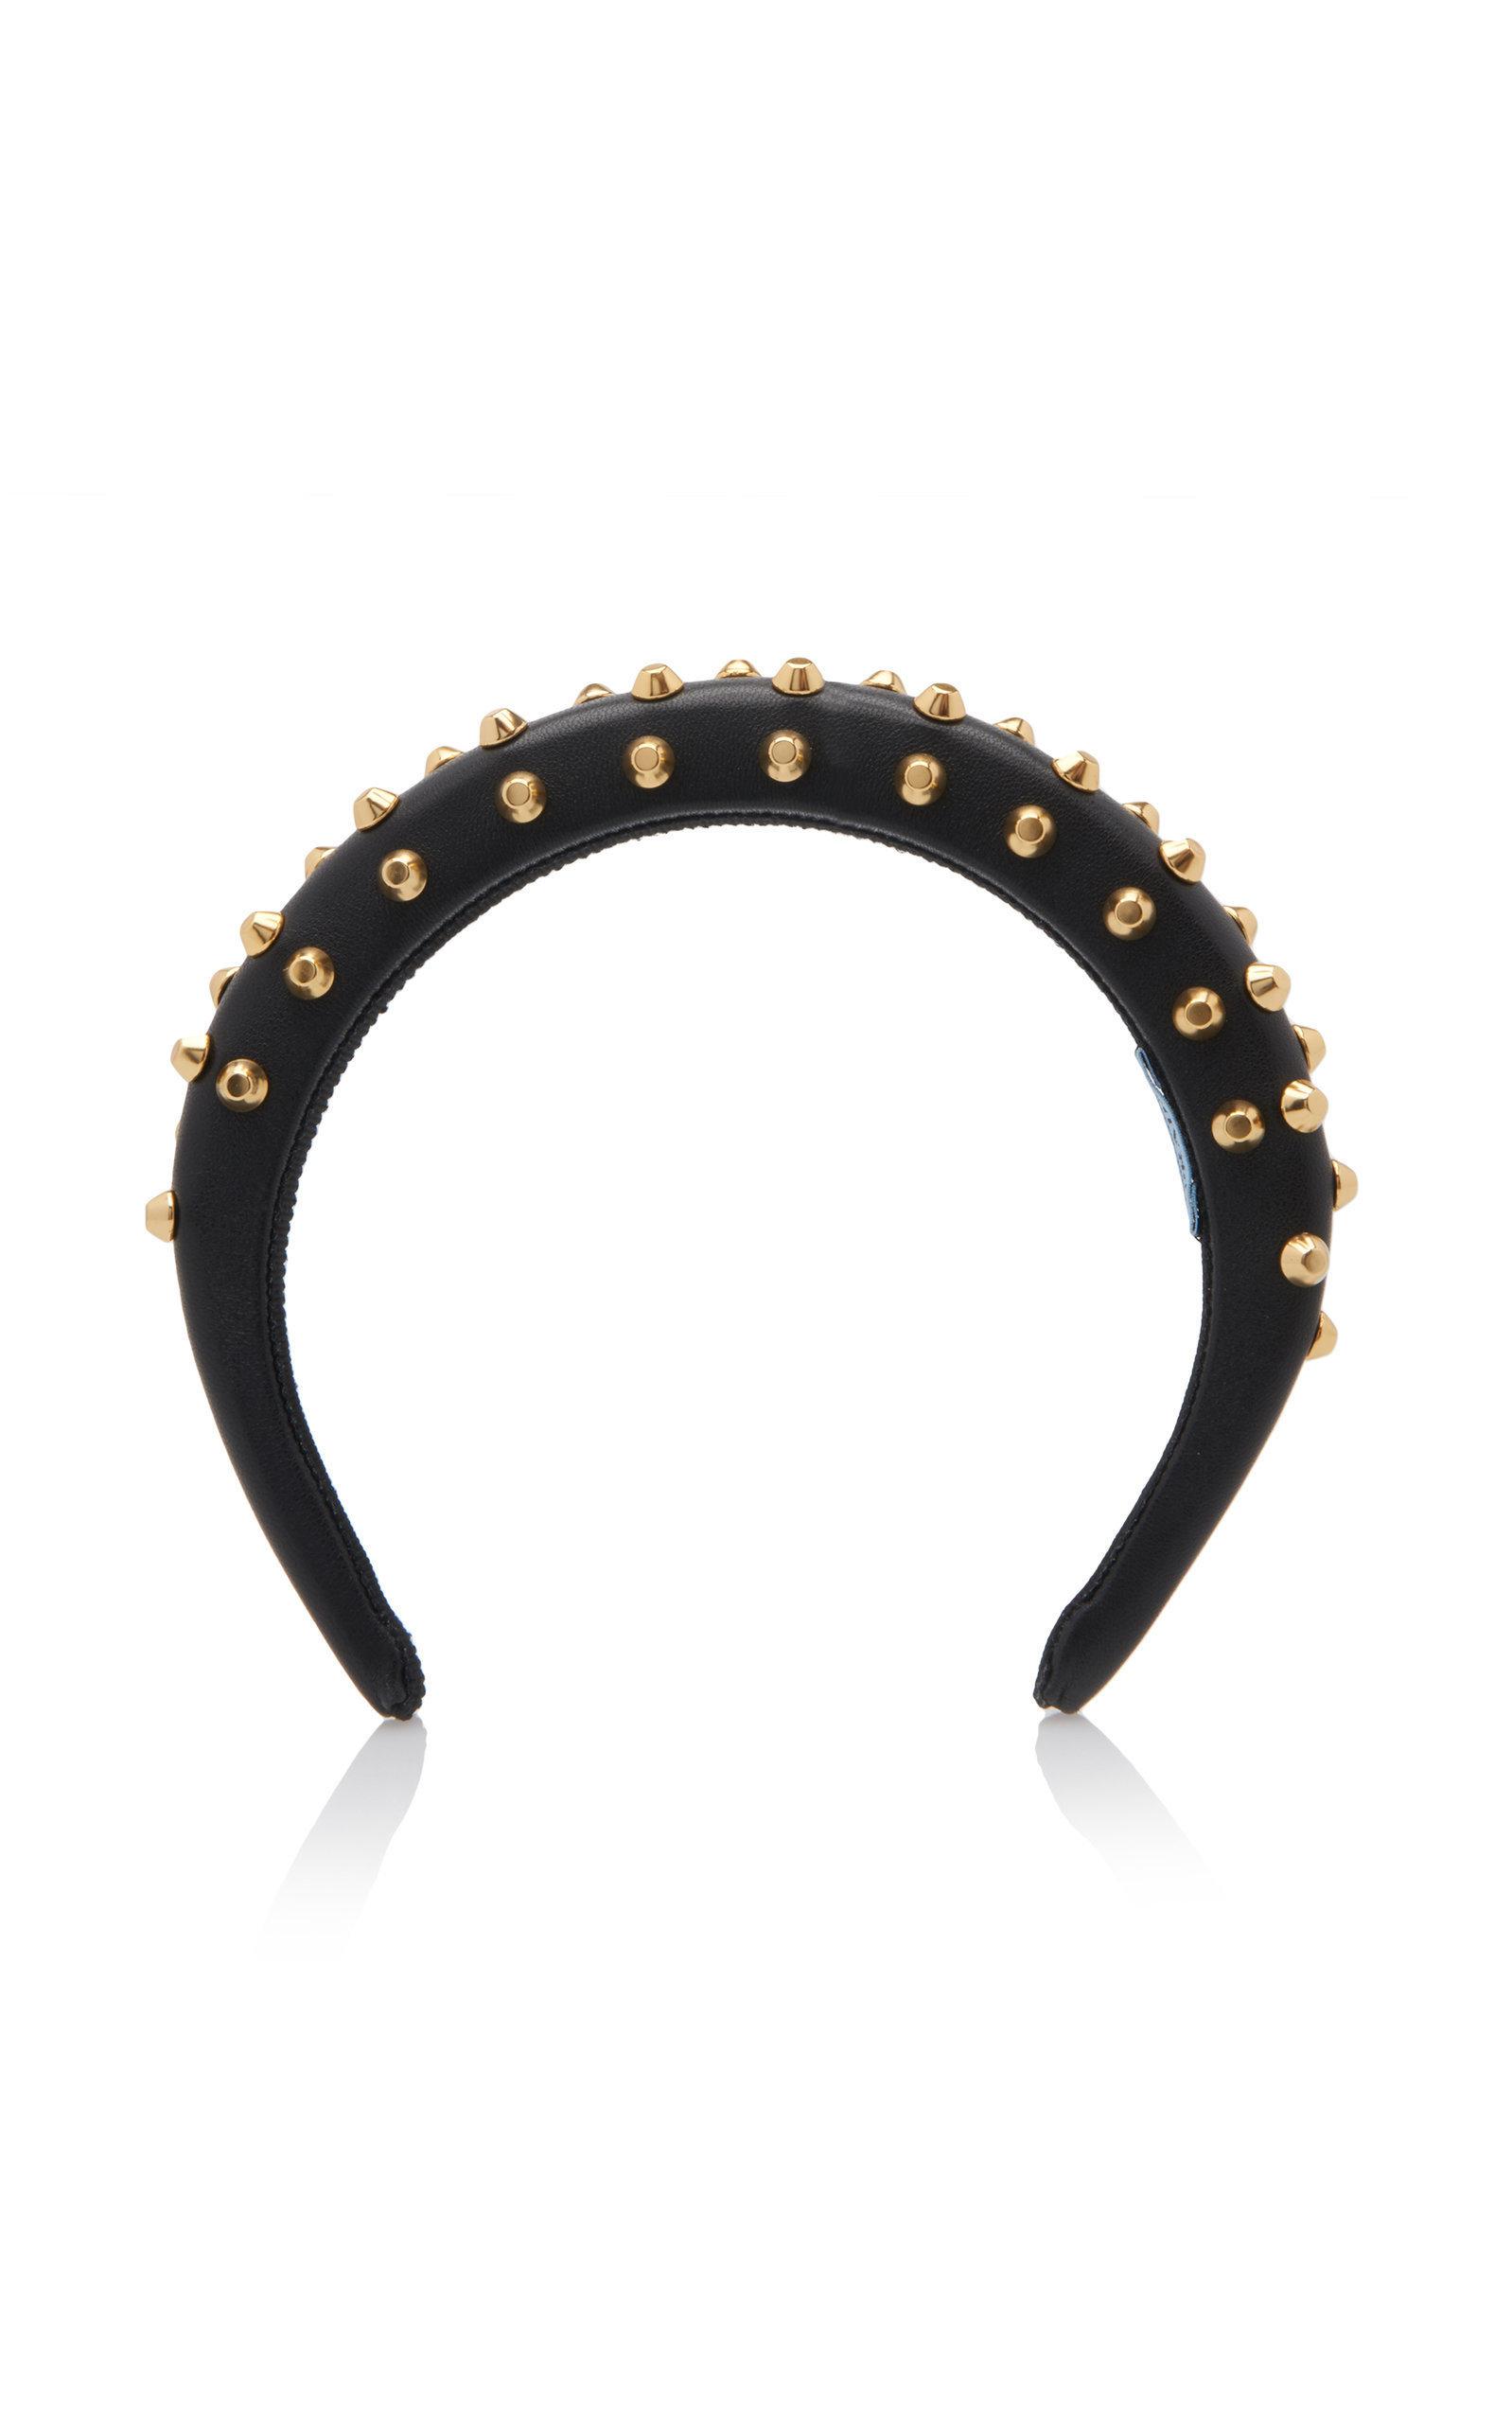 Prada Studded Leather Headband in Black | Lyst